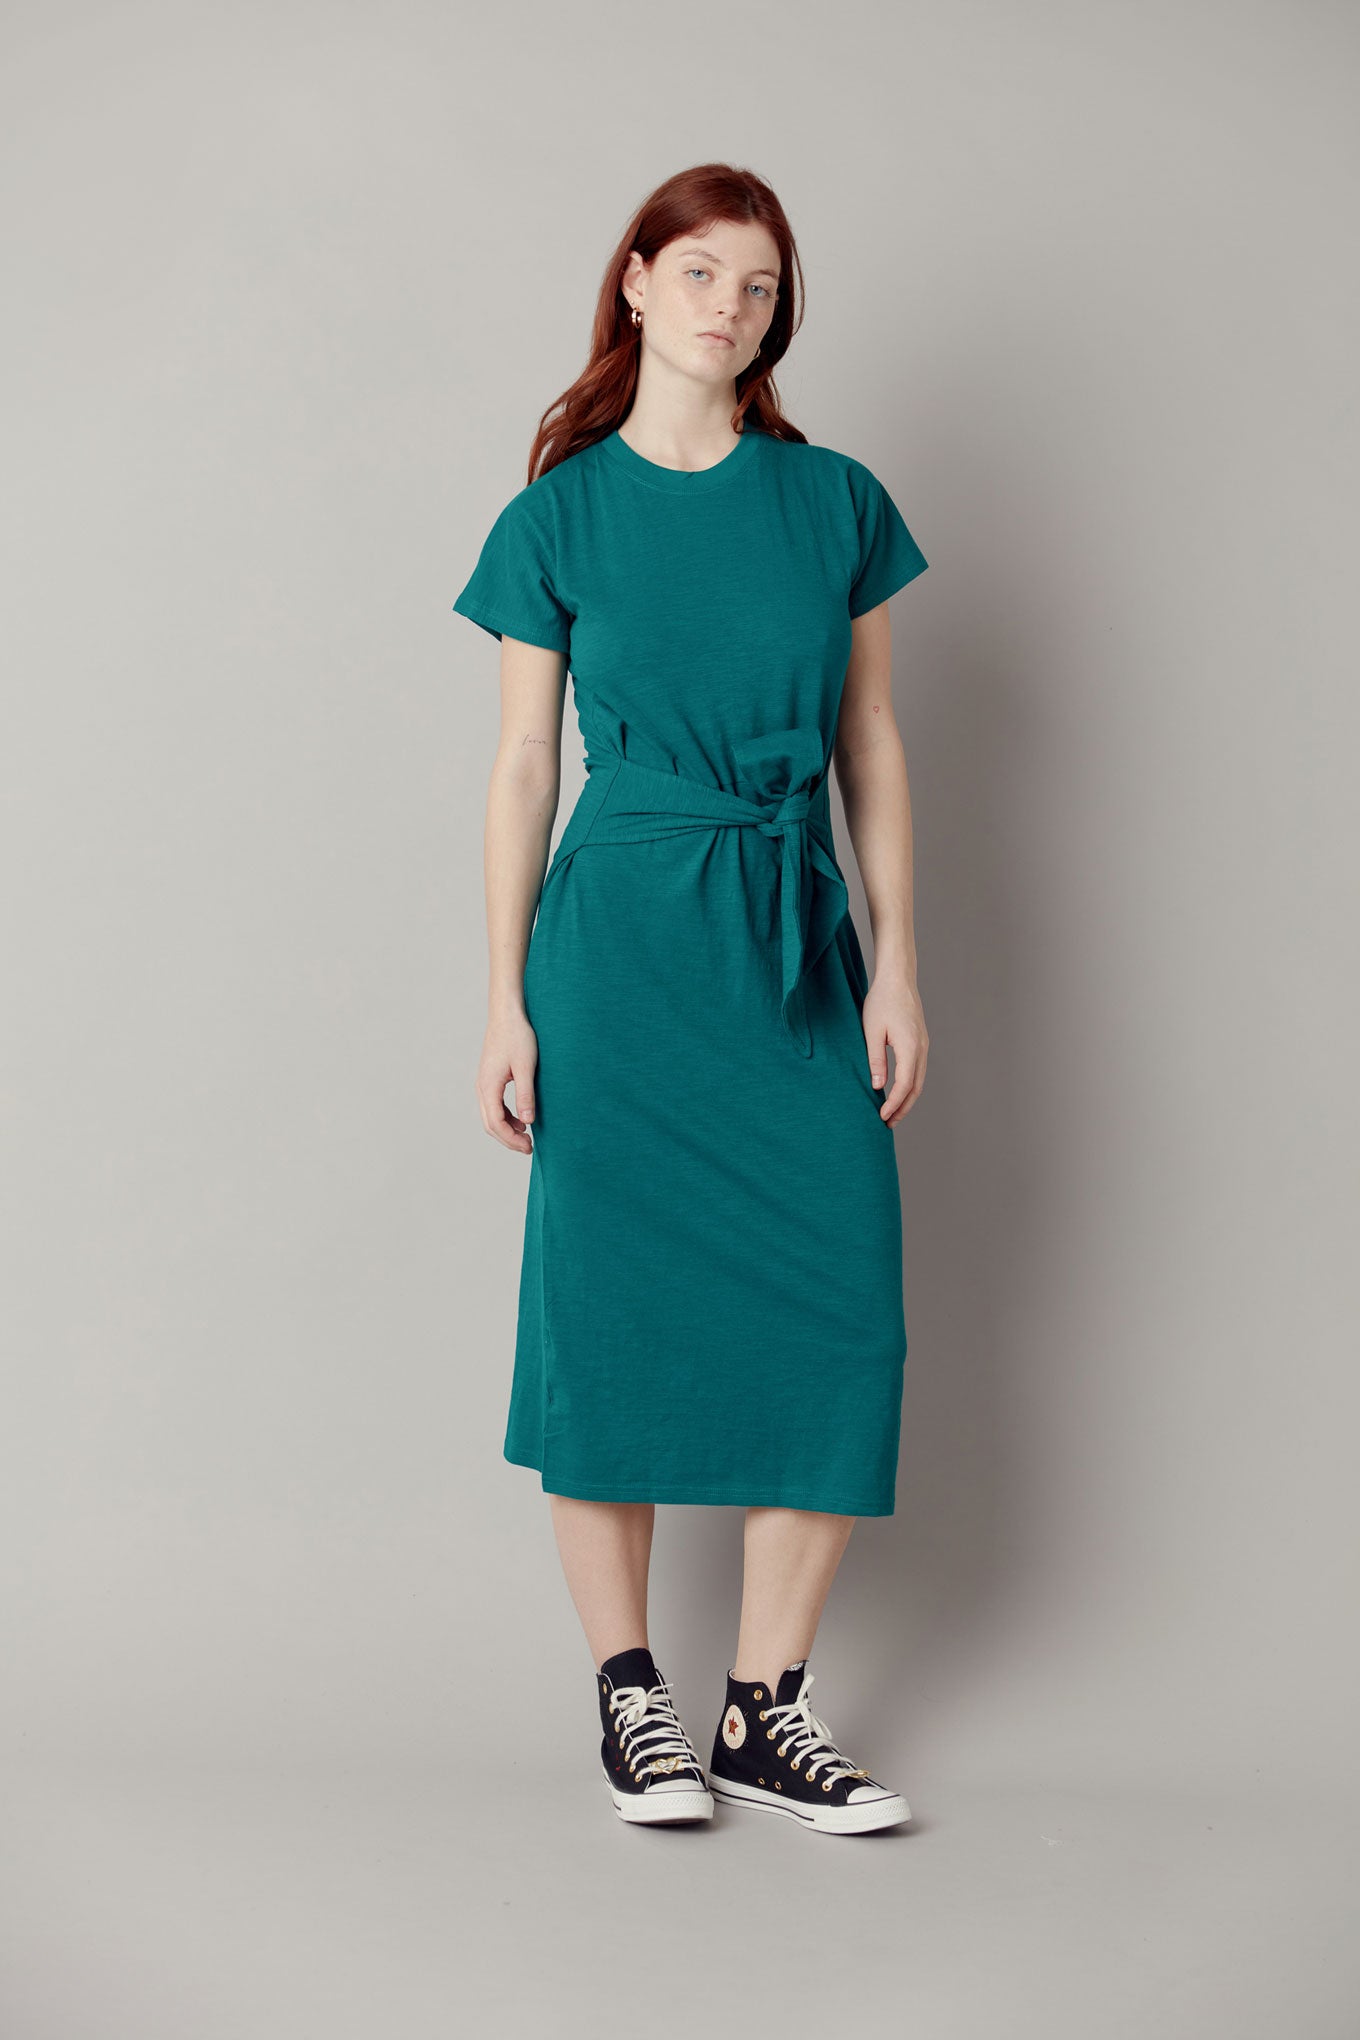 FONDA GOTS Organic Cotton Dress - Teal Green, SIZE 3 / UK 12 / EUR 40